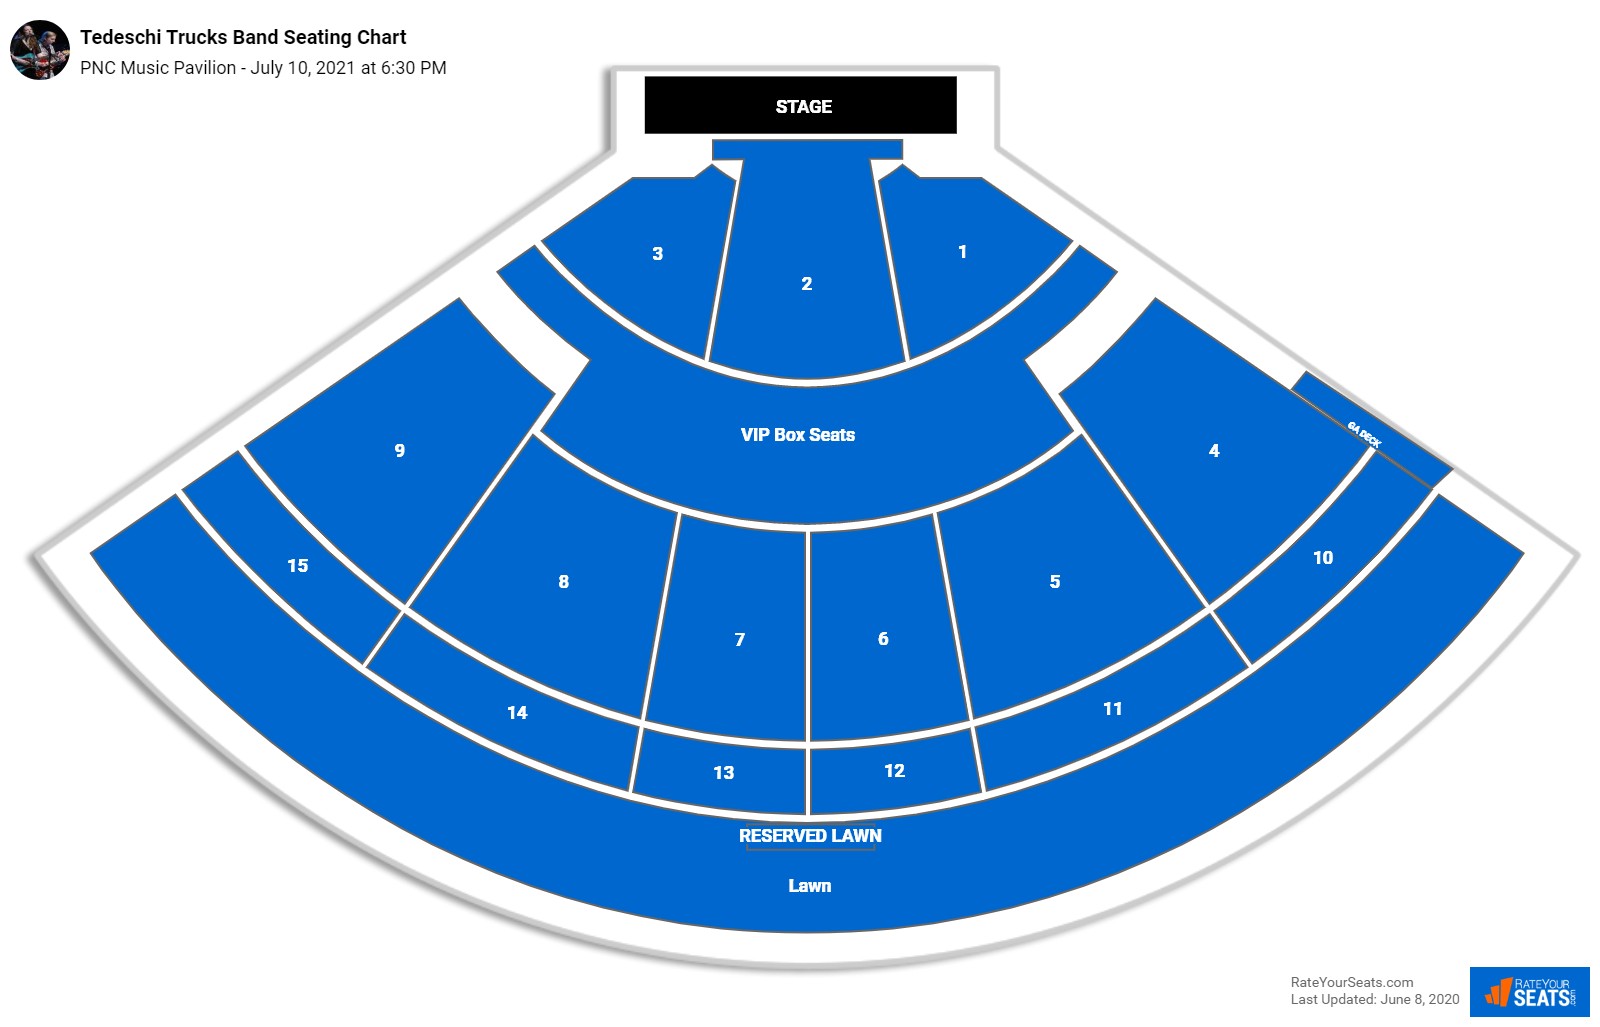 PNC Music Pavilion Seating Chart - RateYourSeats.com